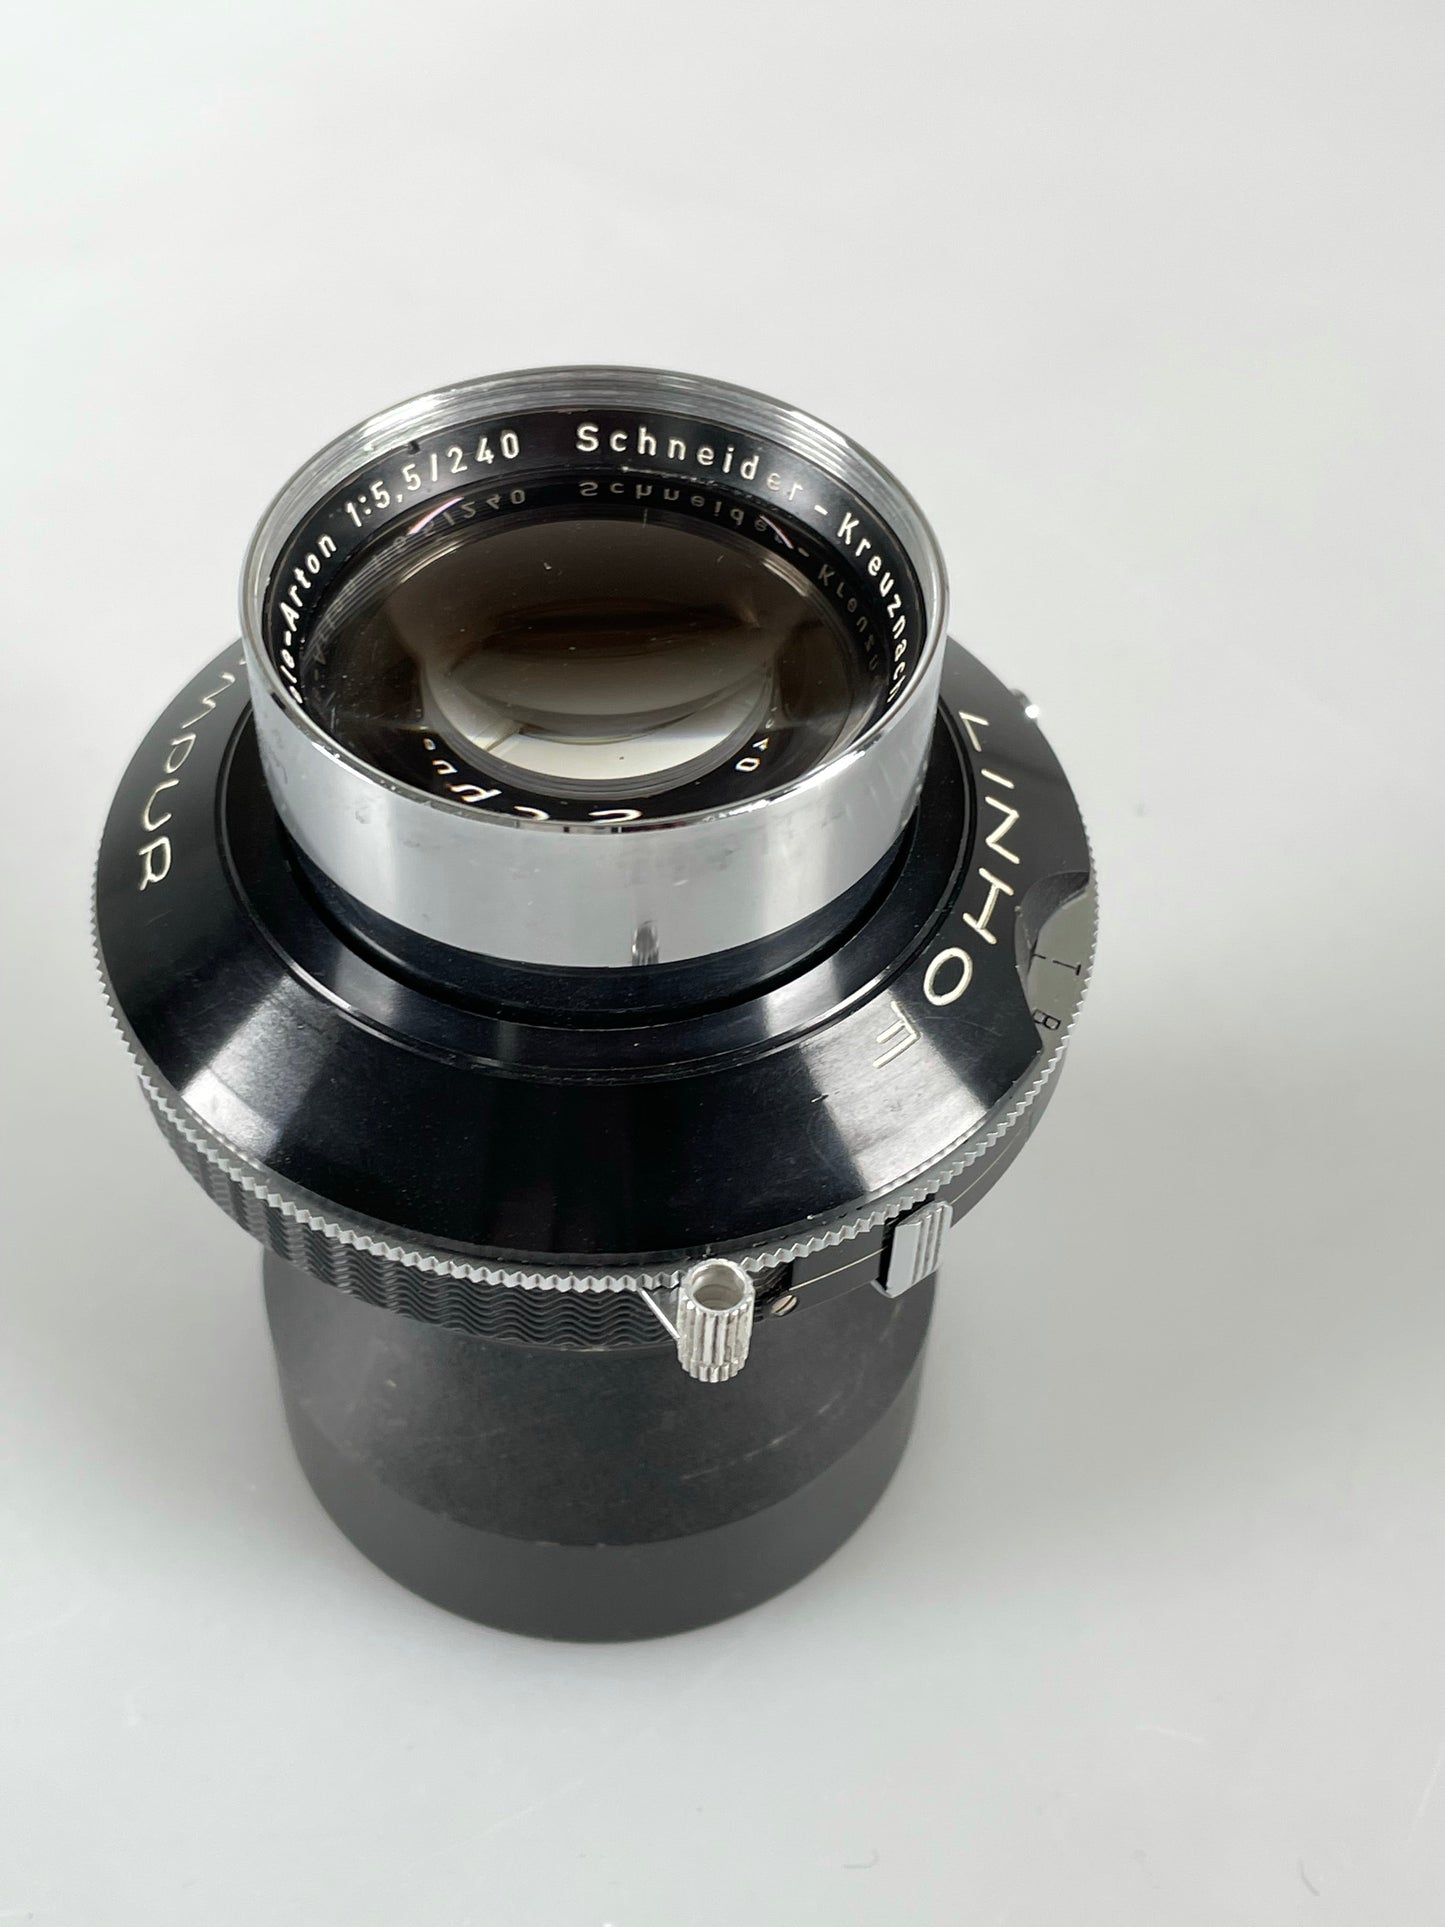 Linhof Technika Tele Arton 240mm f5.5 Schneider large format lens compur shutter